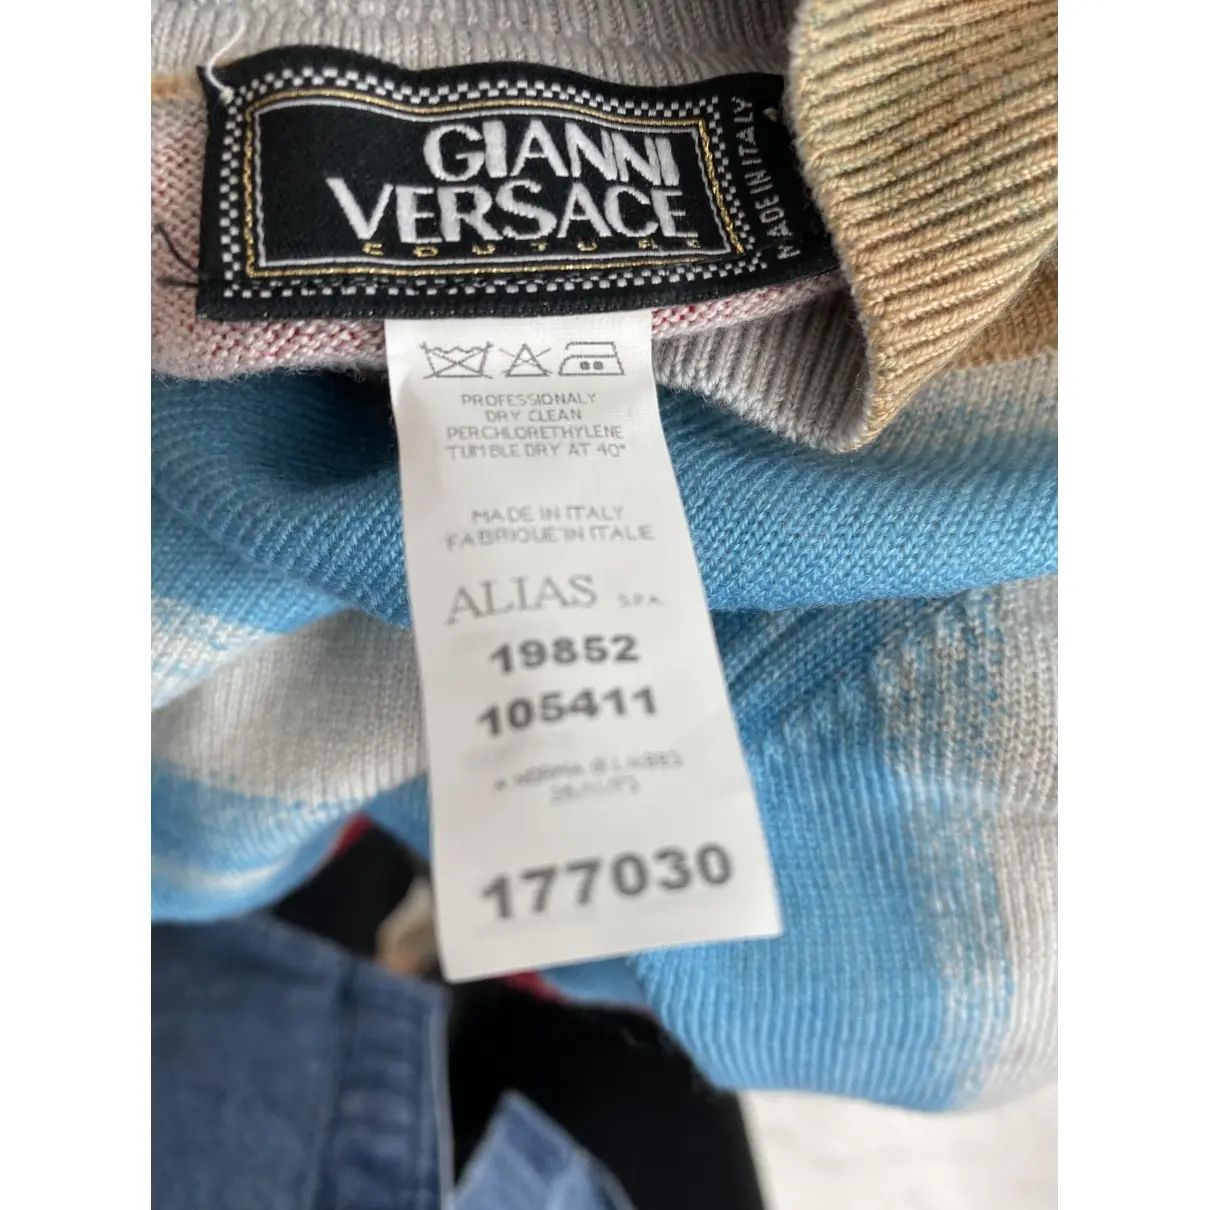 Gianni Versace Wool jumper for sale - Vintage